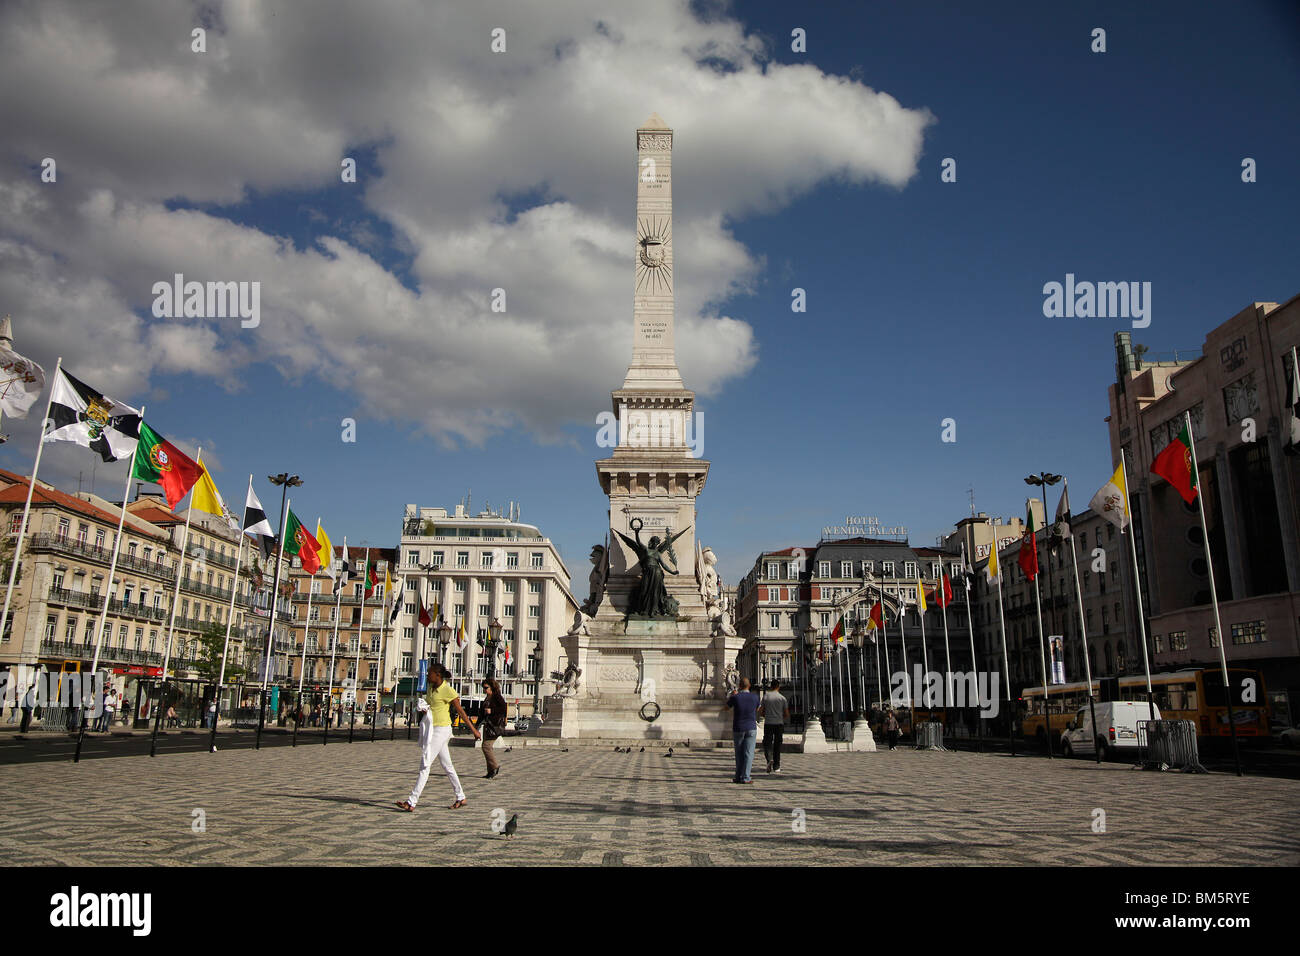 Obelisk on the square Praca dos Restauradores in Lisbon, Portugal, Europe Stock Photo